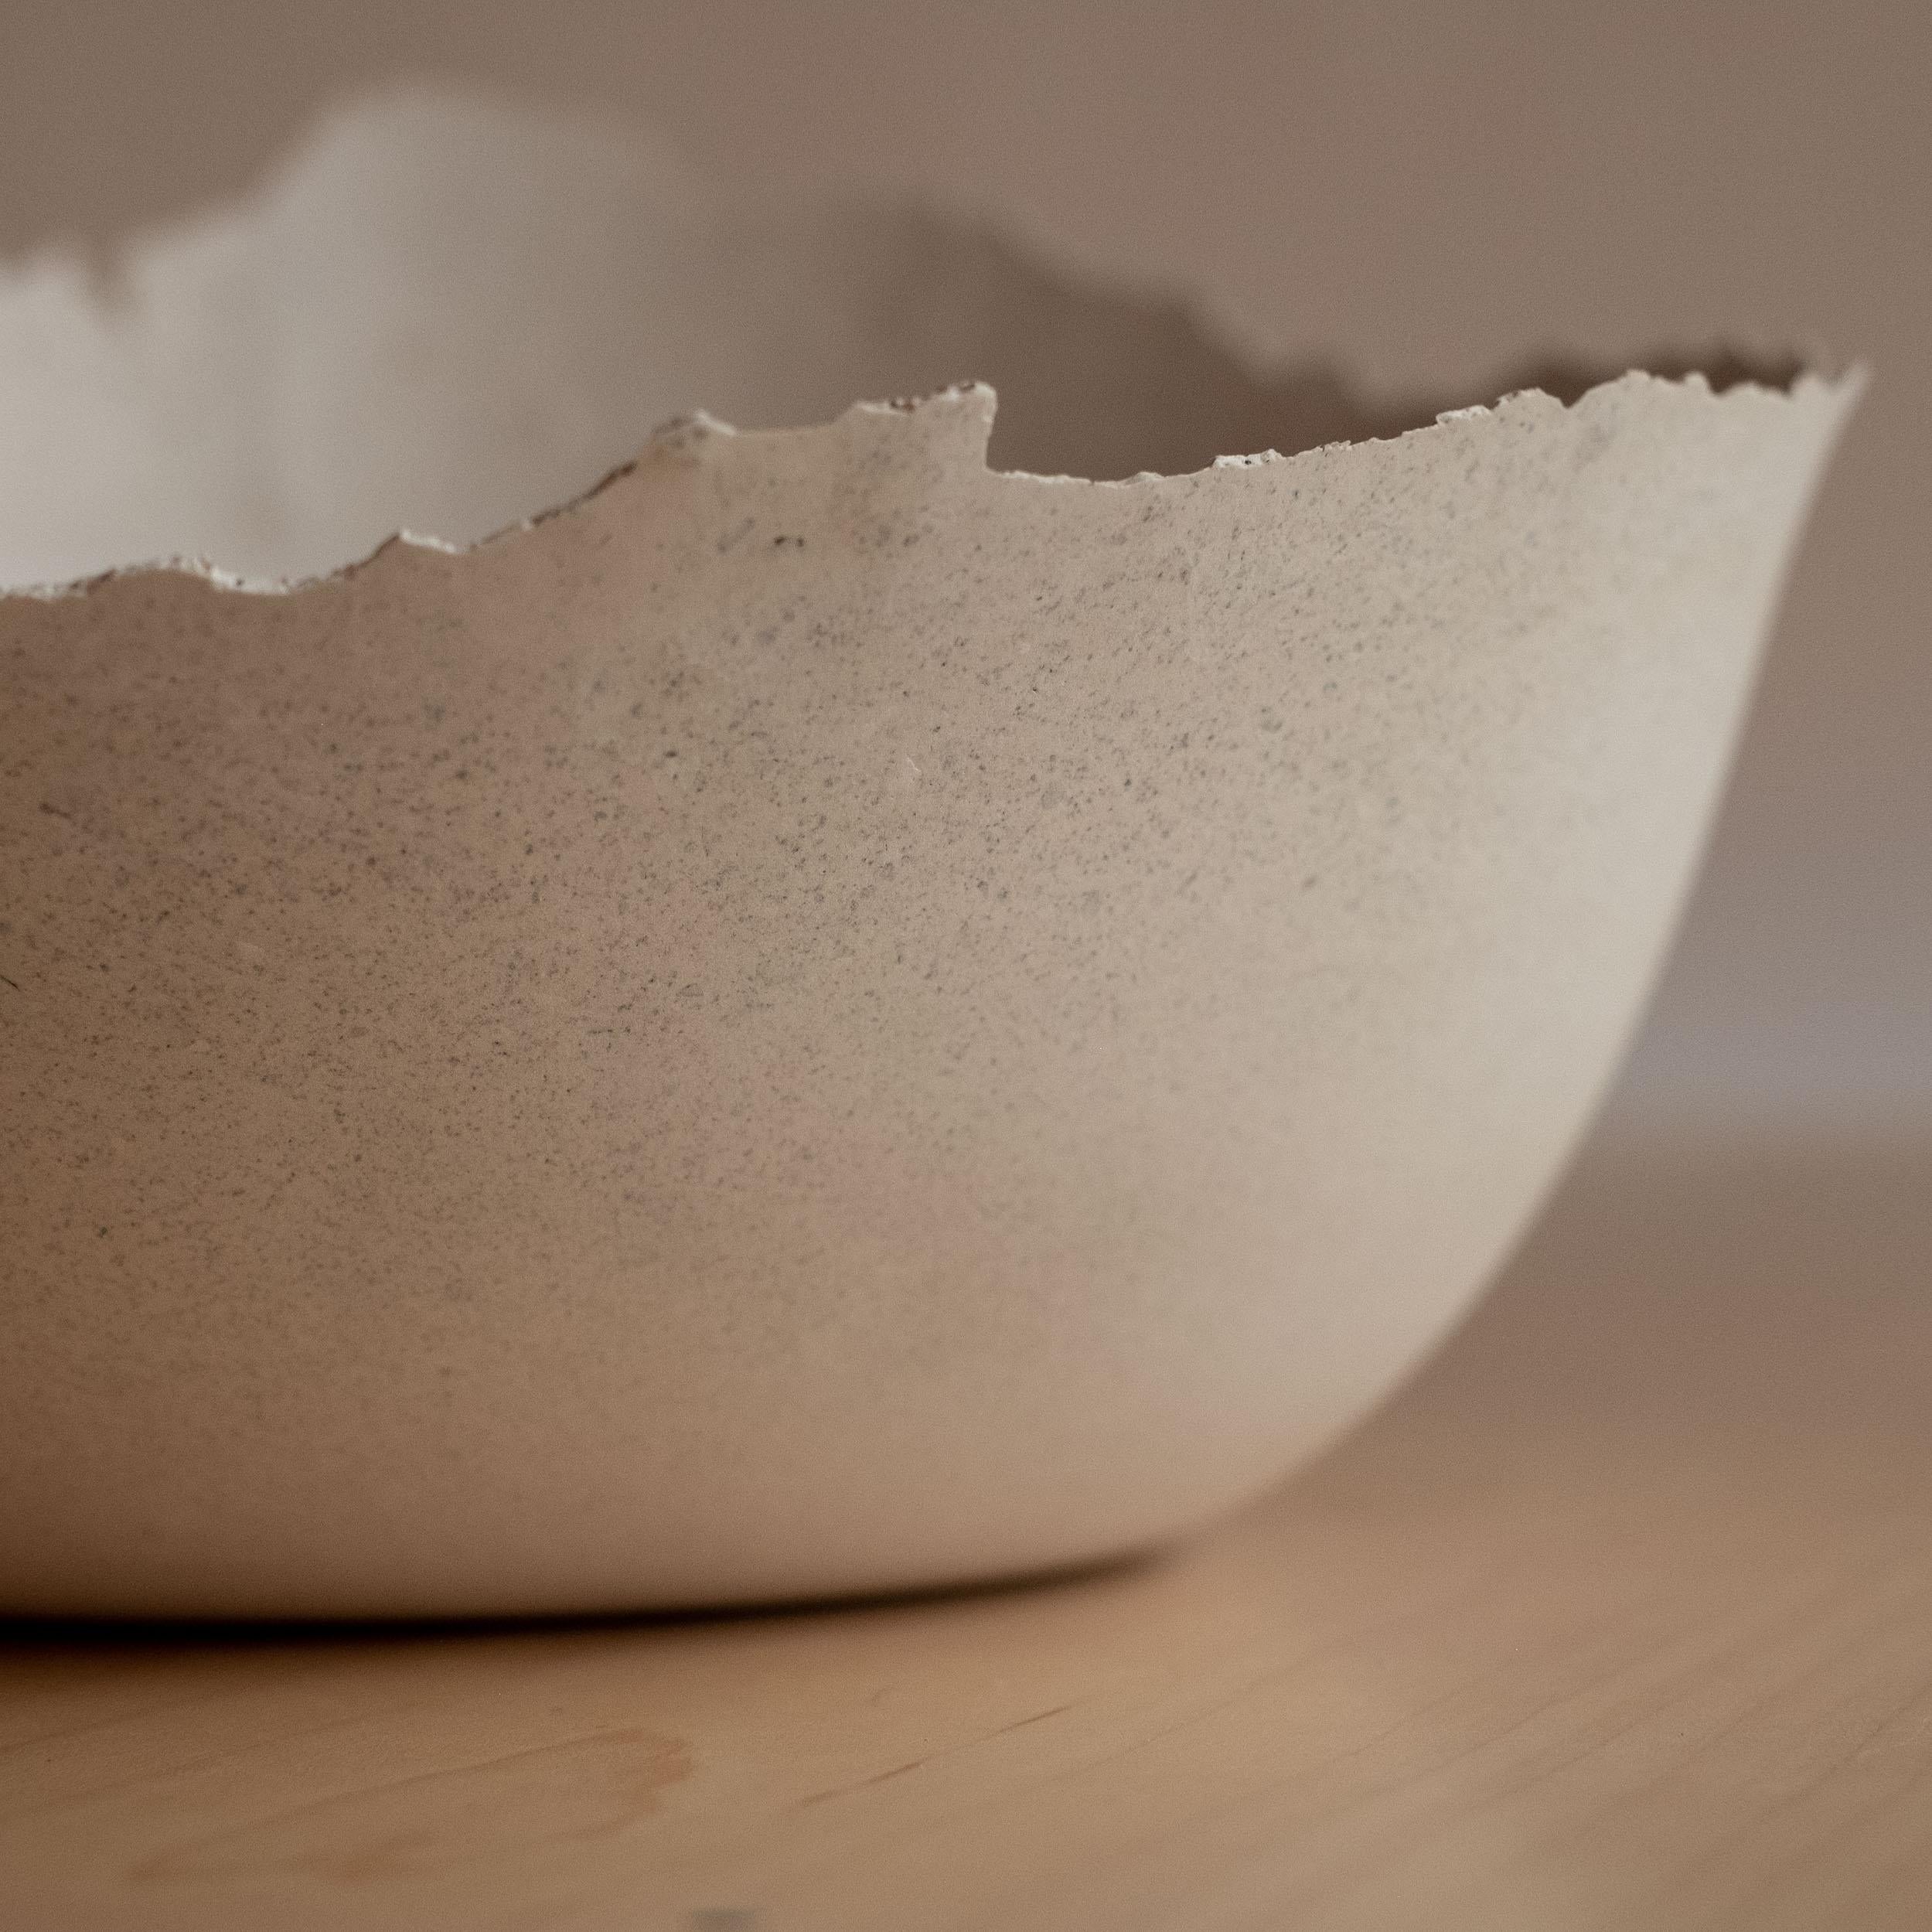 Handmade Cast Concrete Bowl in Grey by UMÉ Studio For Sale 8